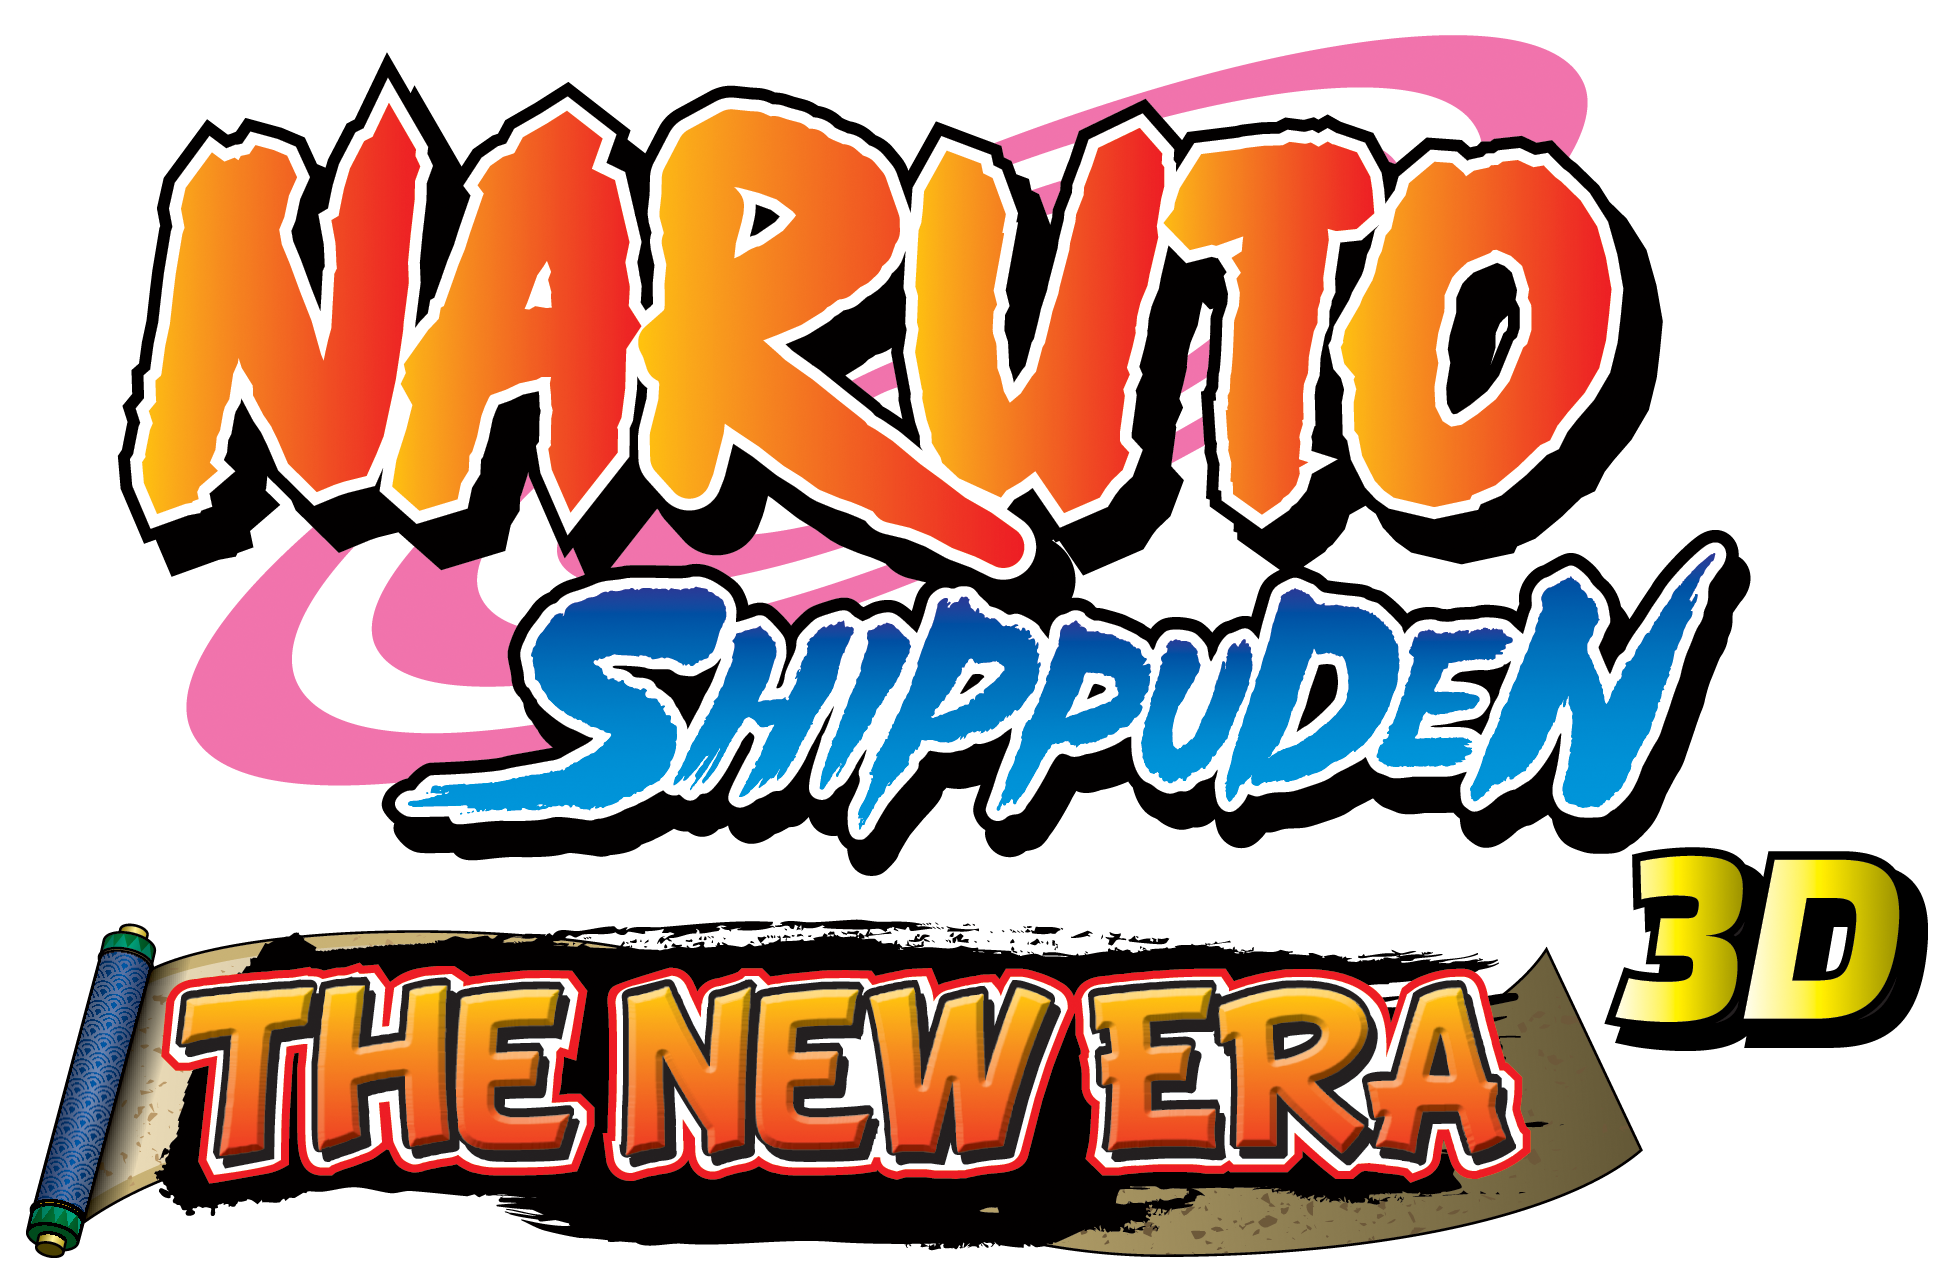 Японский Naruto Shippuden logo PNG Image